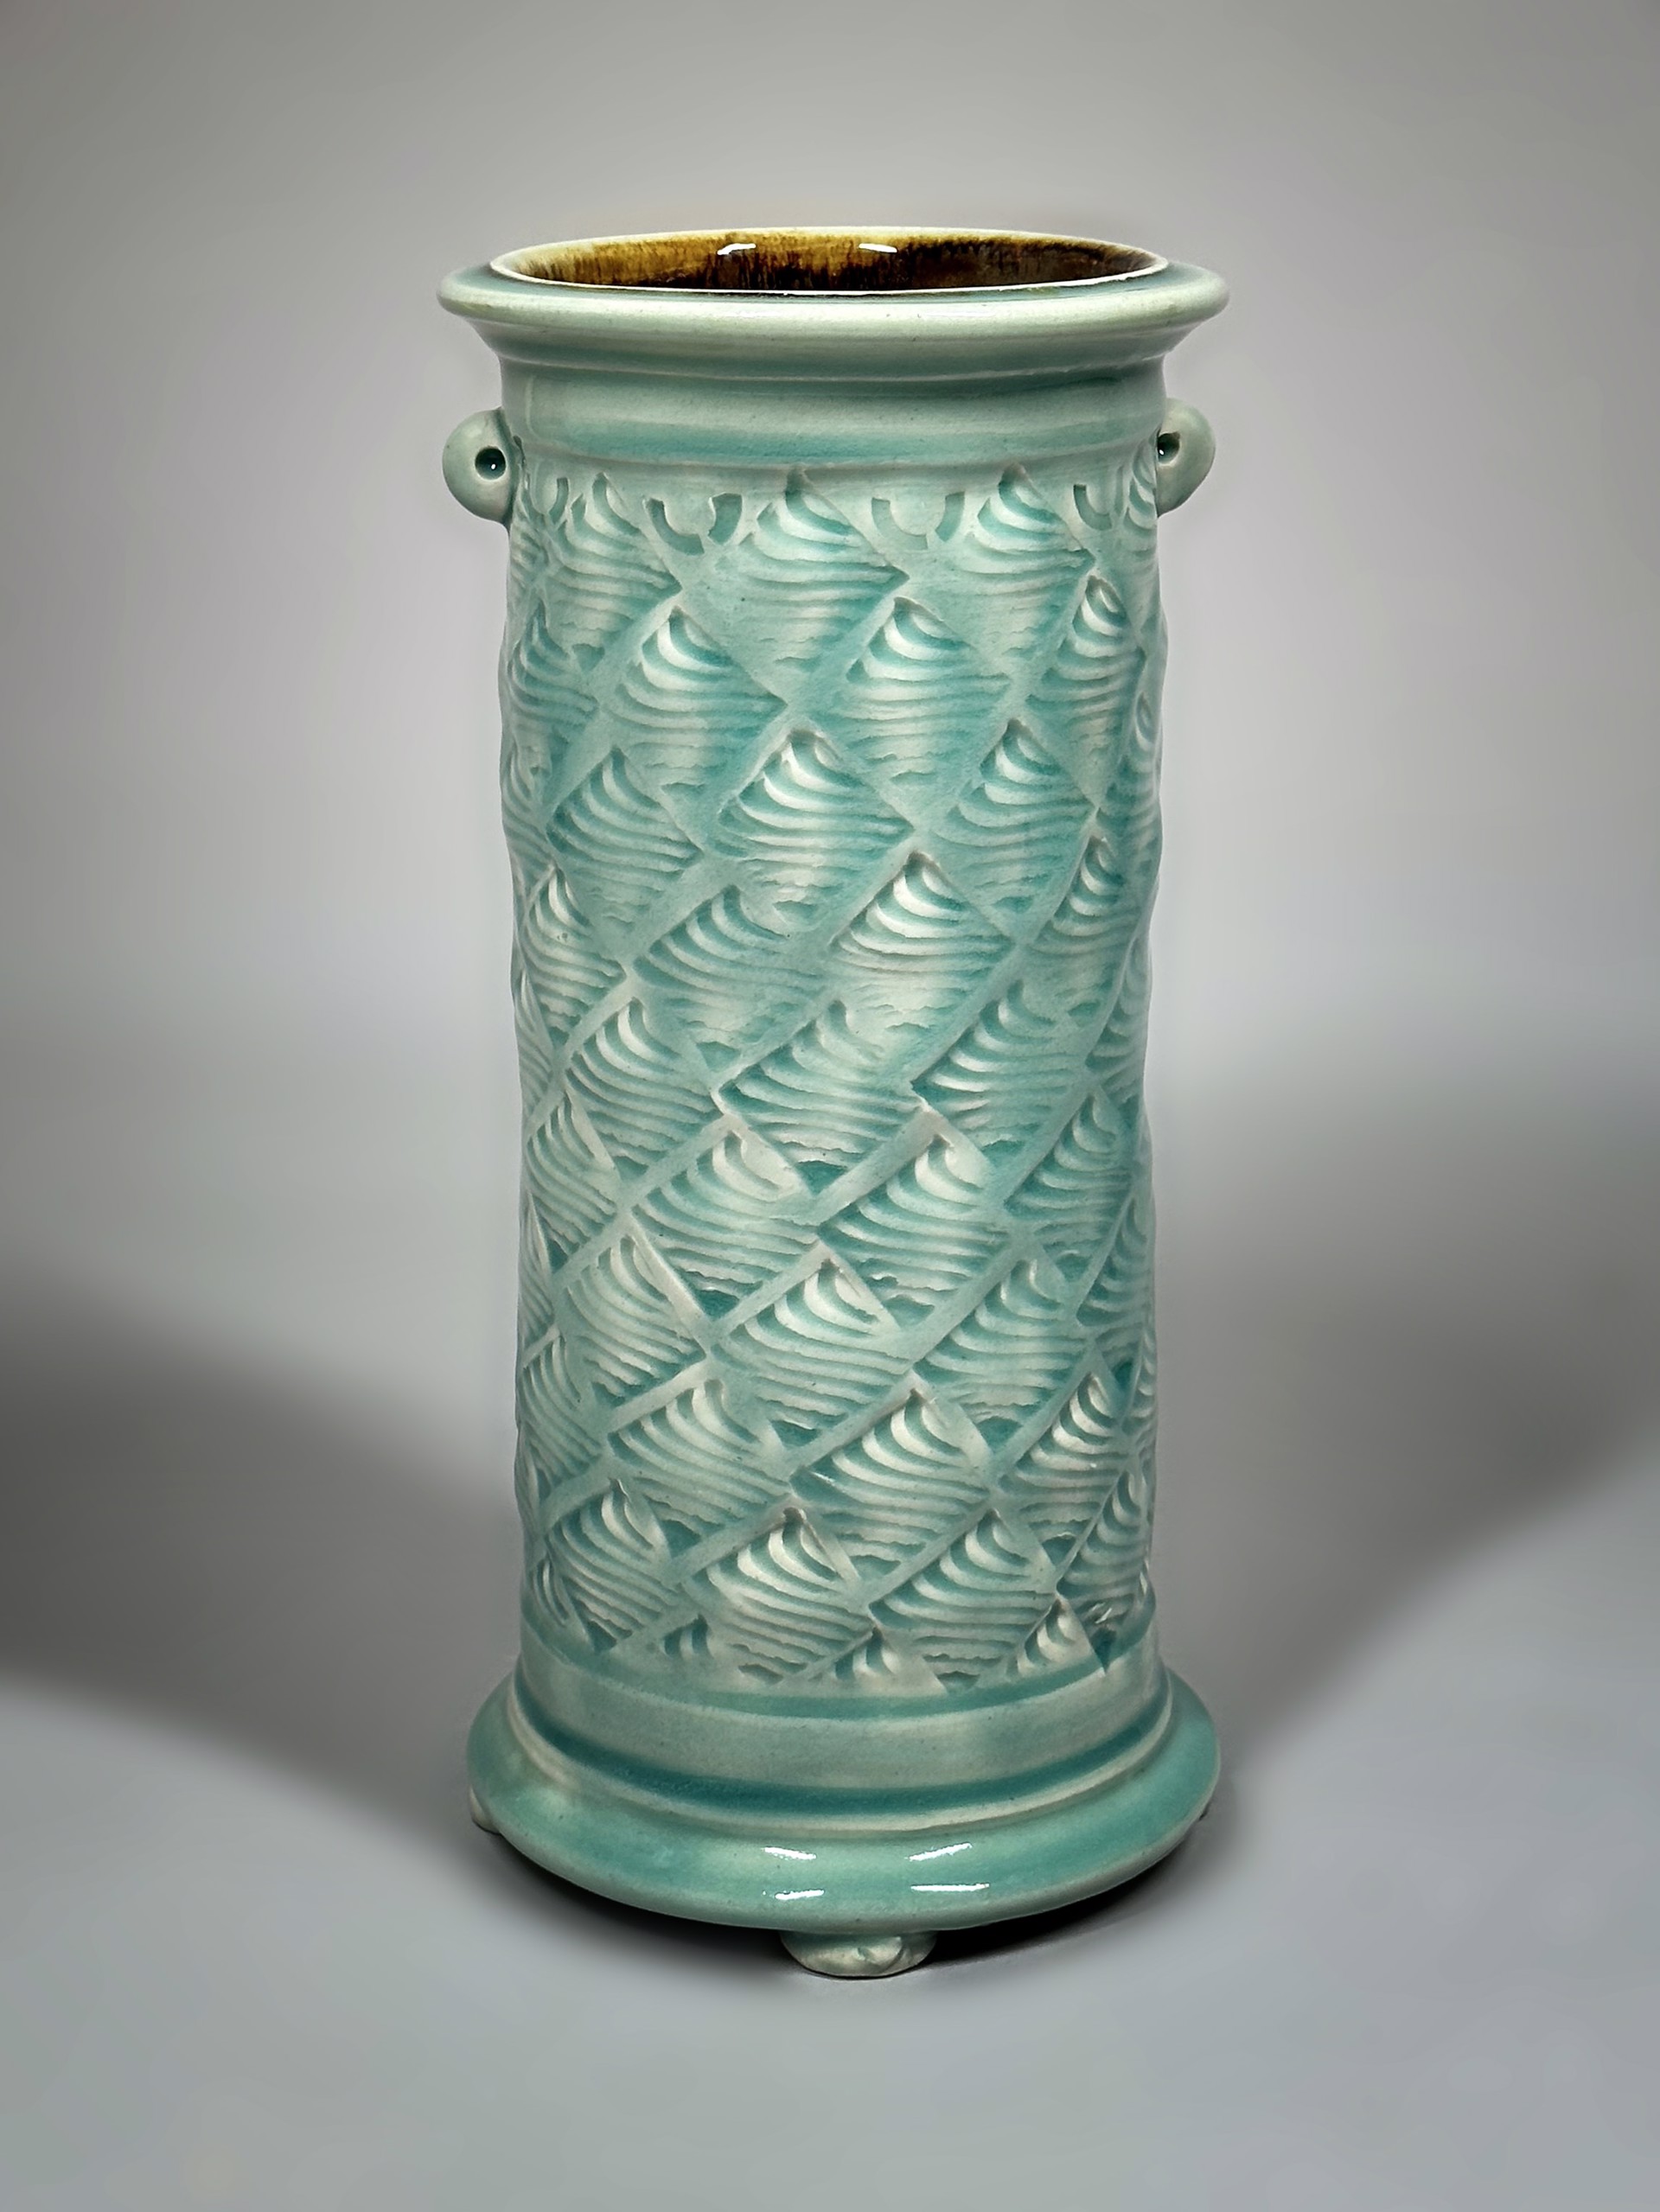 Celedon Wave Cylinder by Don Sprague